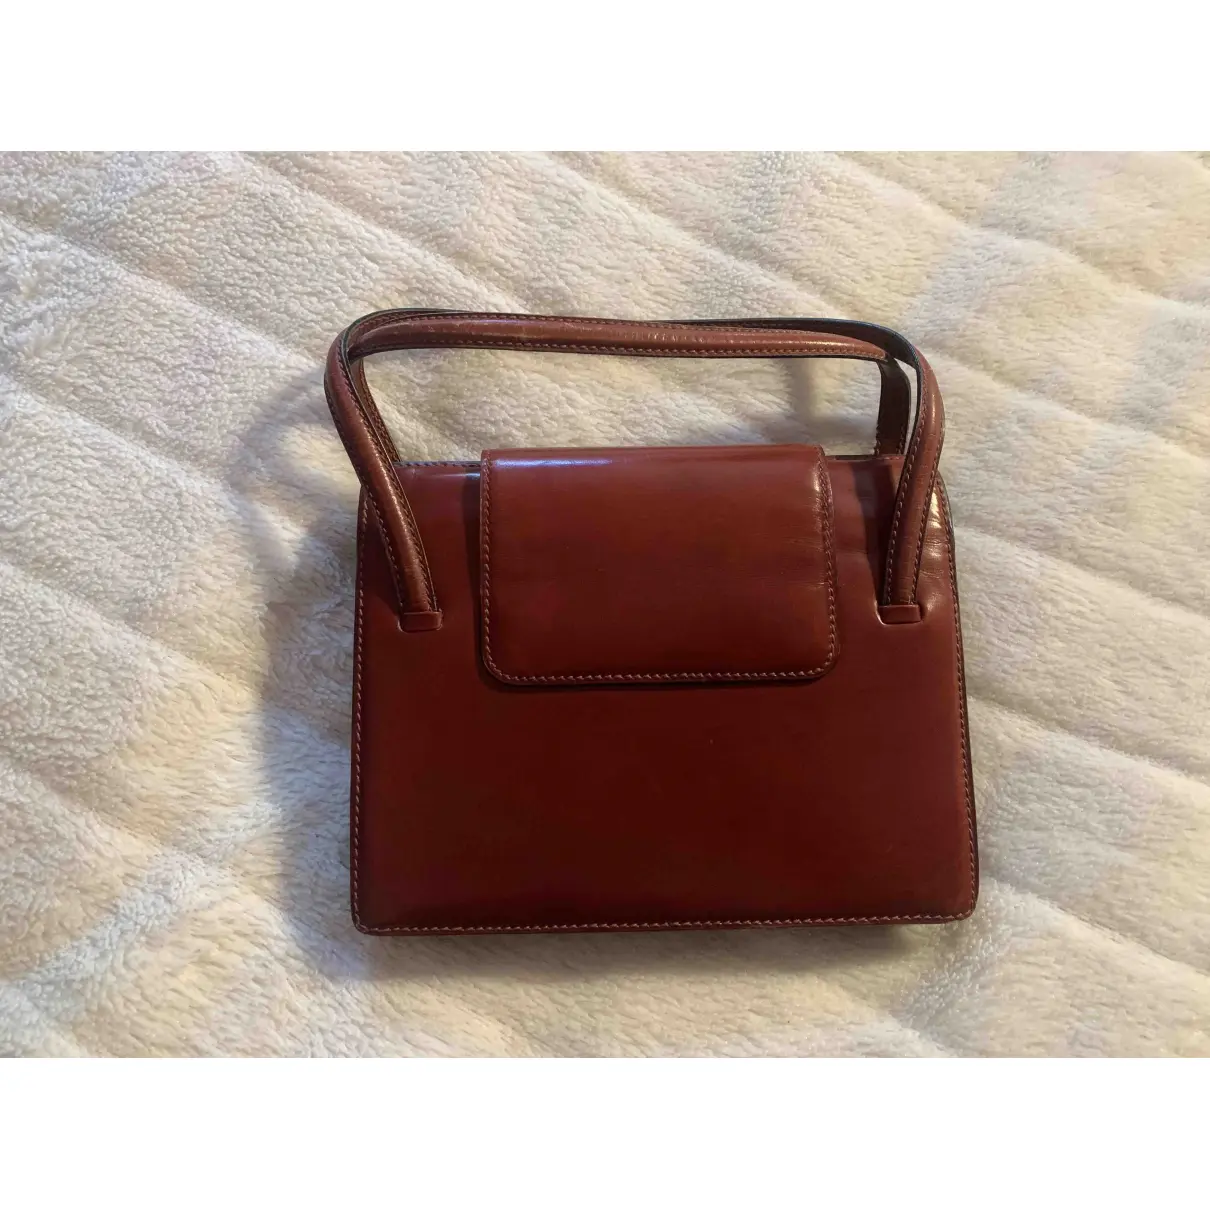 Leather handbag Charles Jourdan - Vintage